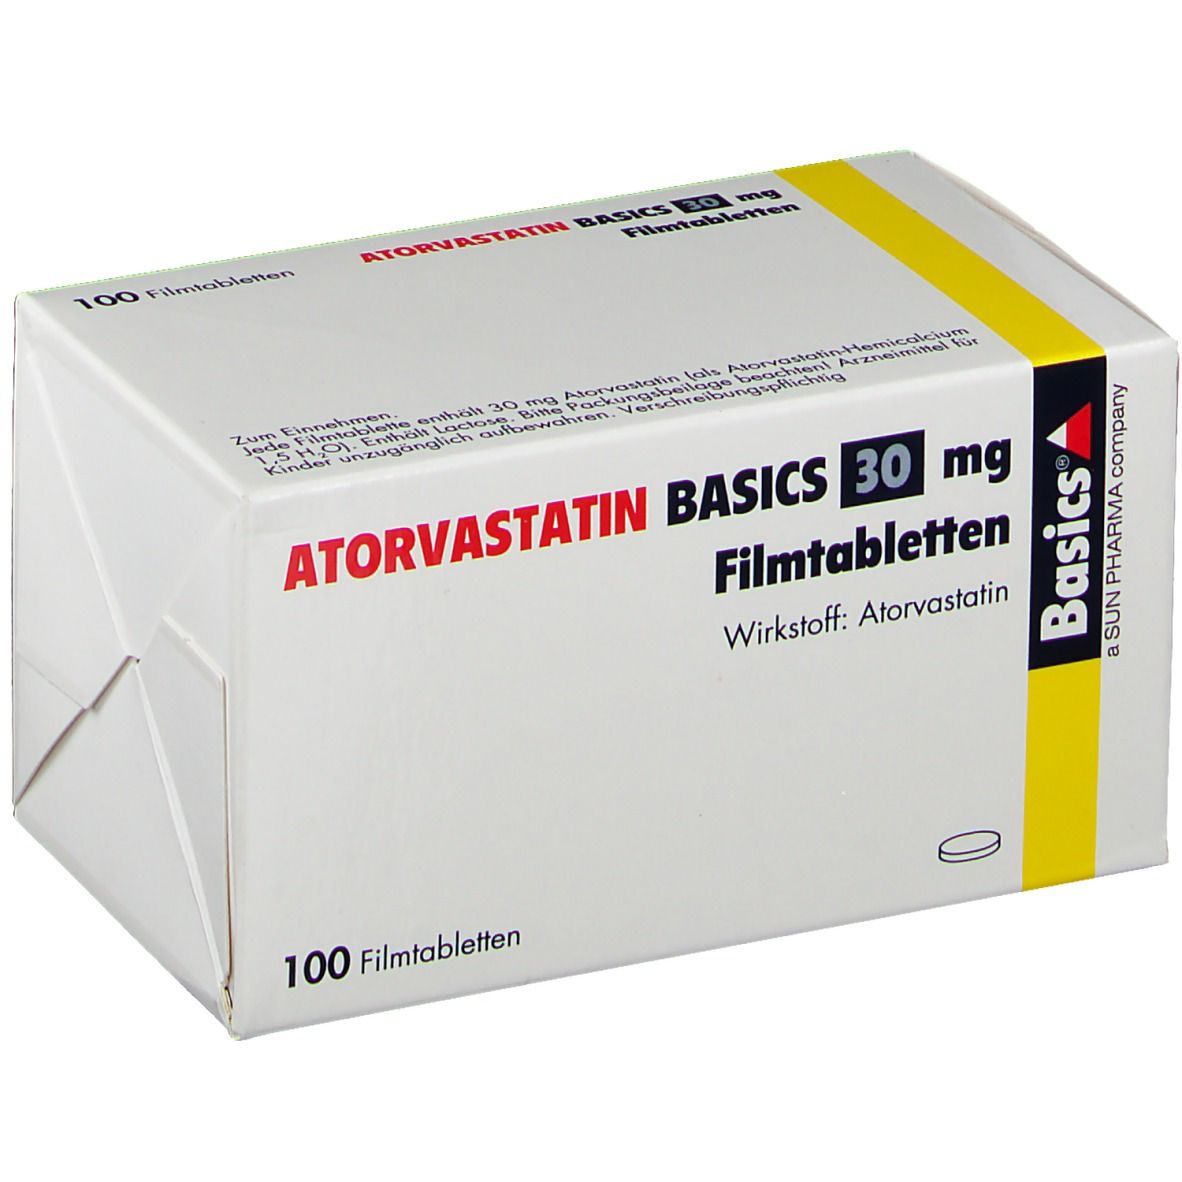 ATORVASTATIN BASICS 30 mg